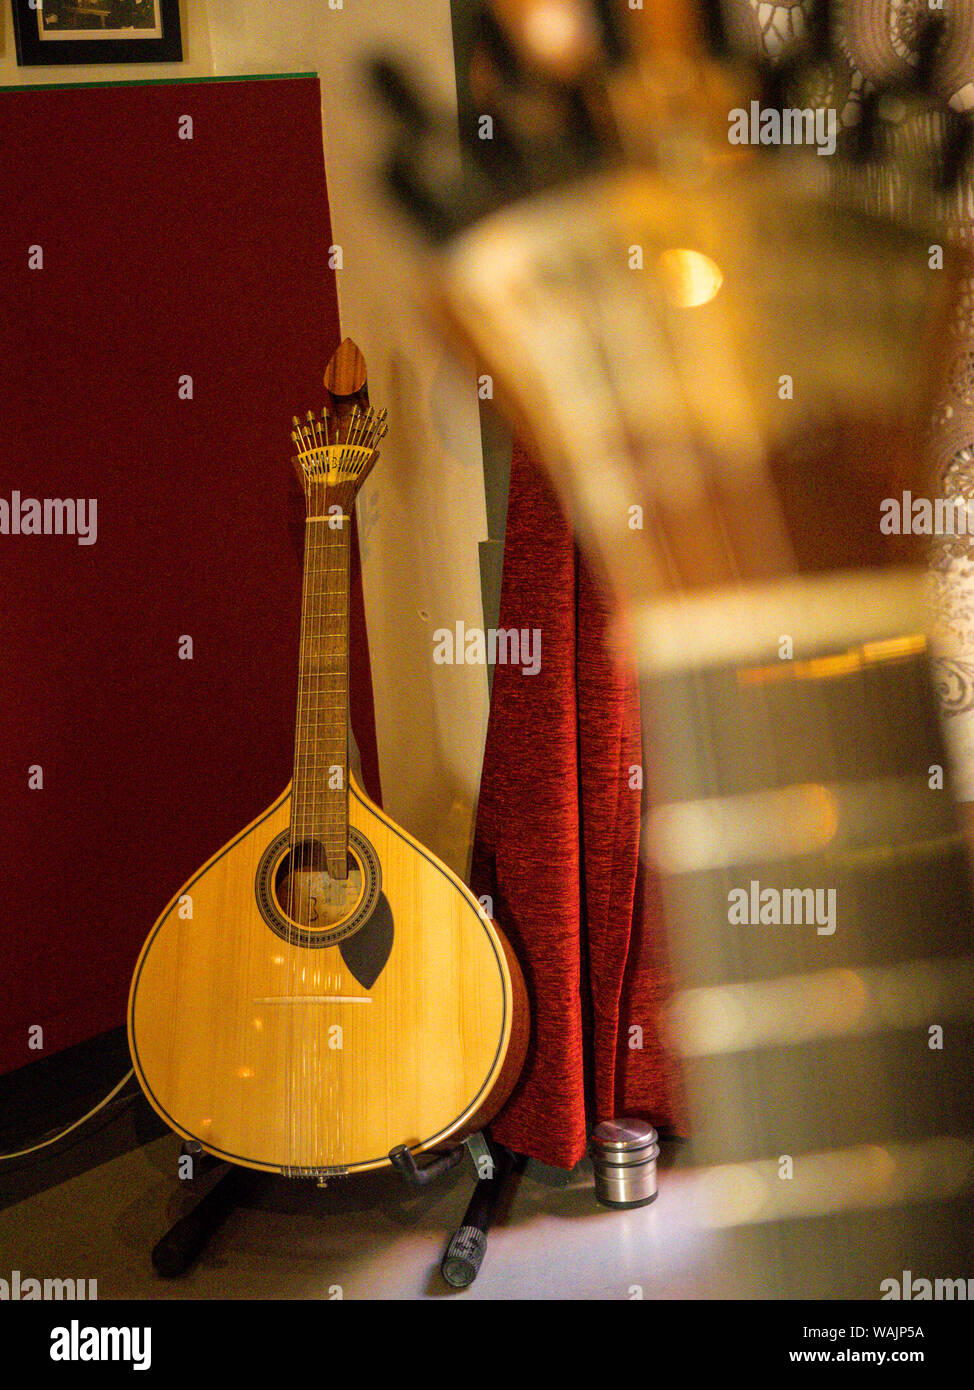 Portugal, Coimbra. Portuguese Guitar used for Fado music Stock Photo